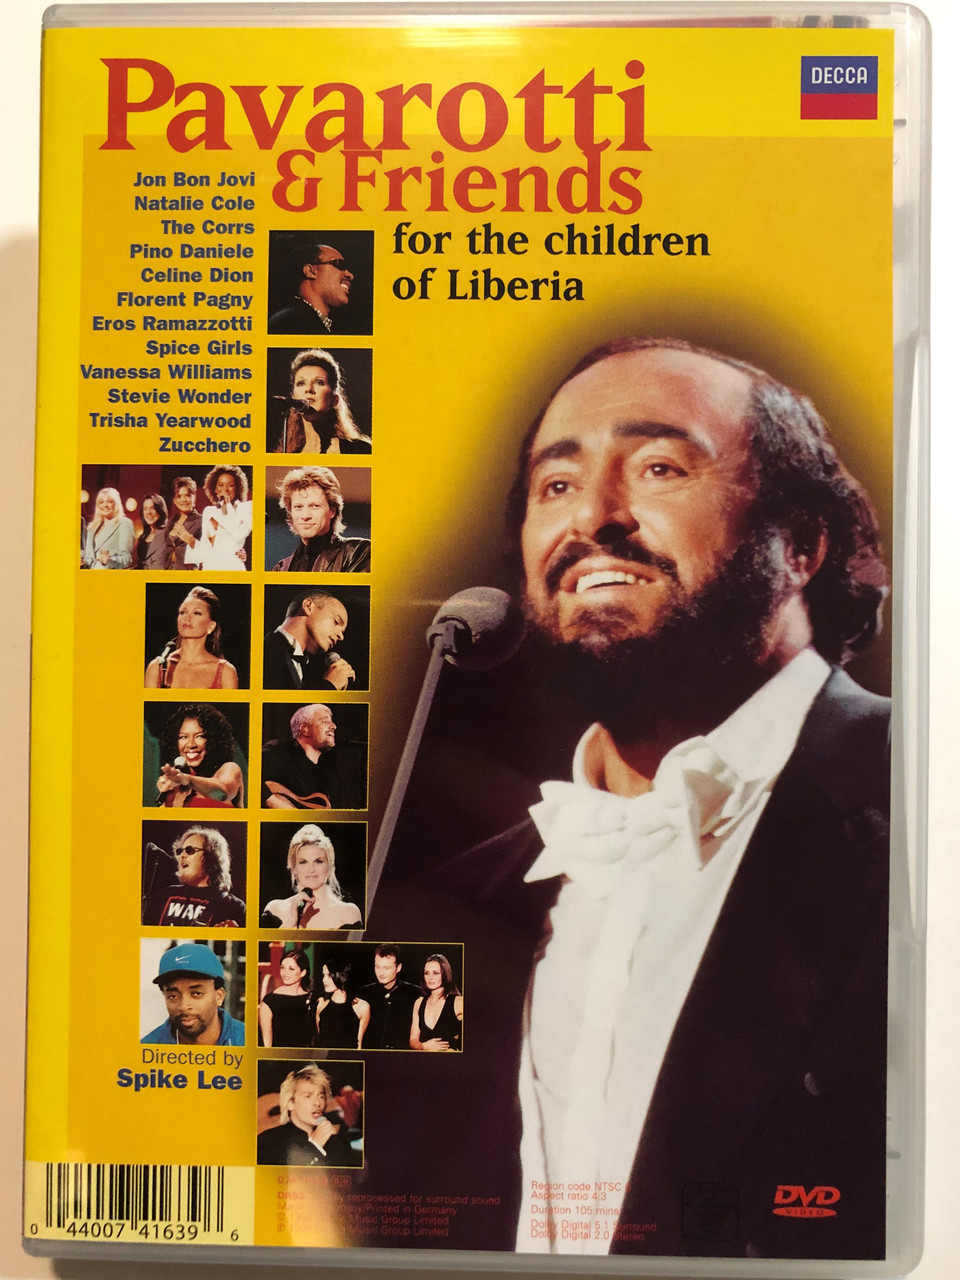 Pavarotti & Friends DVD 1998 For the children of Liberia / Directed by  Spike Lee / Jon Bon Jovi, Natalie Cole, The Corrs, Celine Dion, Spice  Girls, Stevie Wonder / Decca - bibleinmylanguage